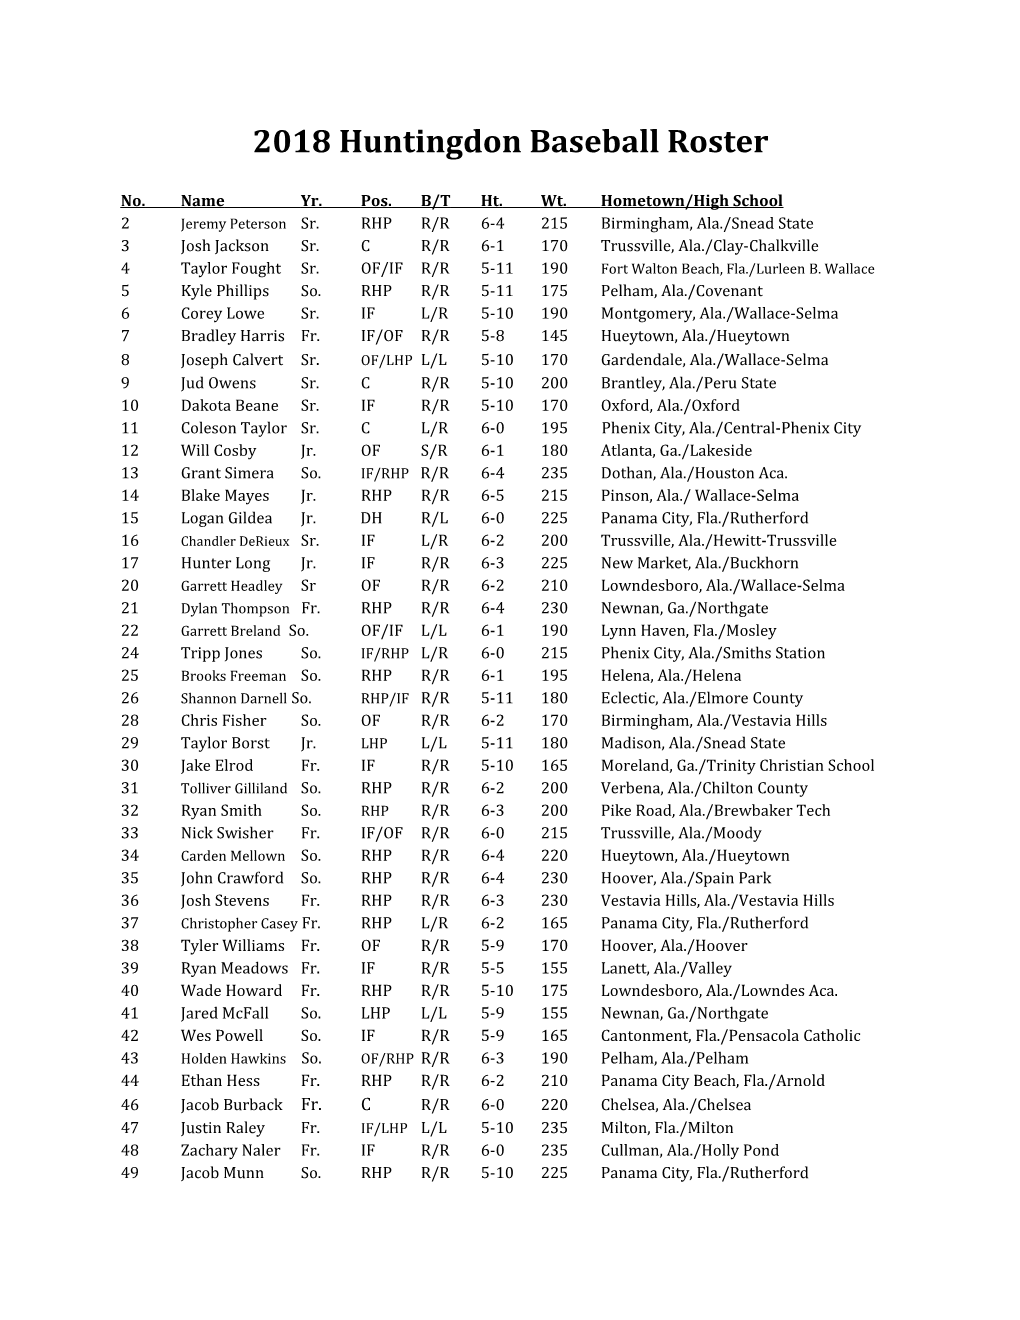 2014 Huntingdon Baseball Roster